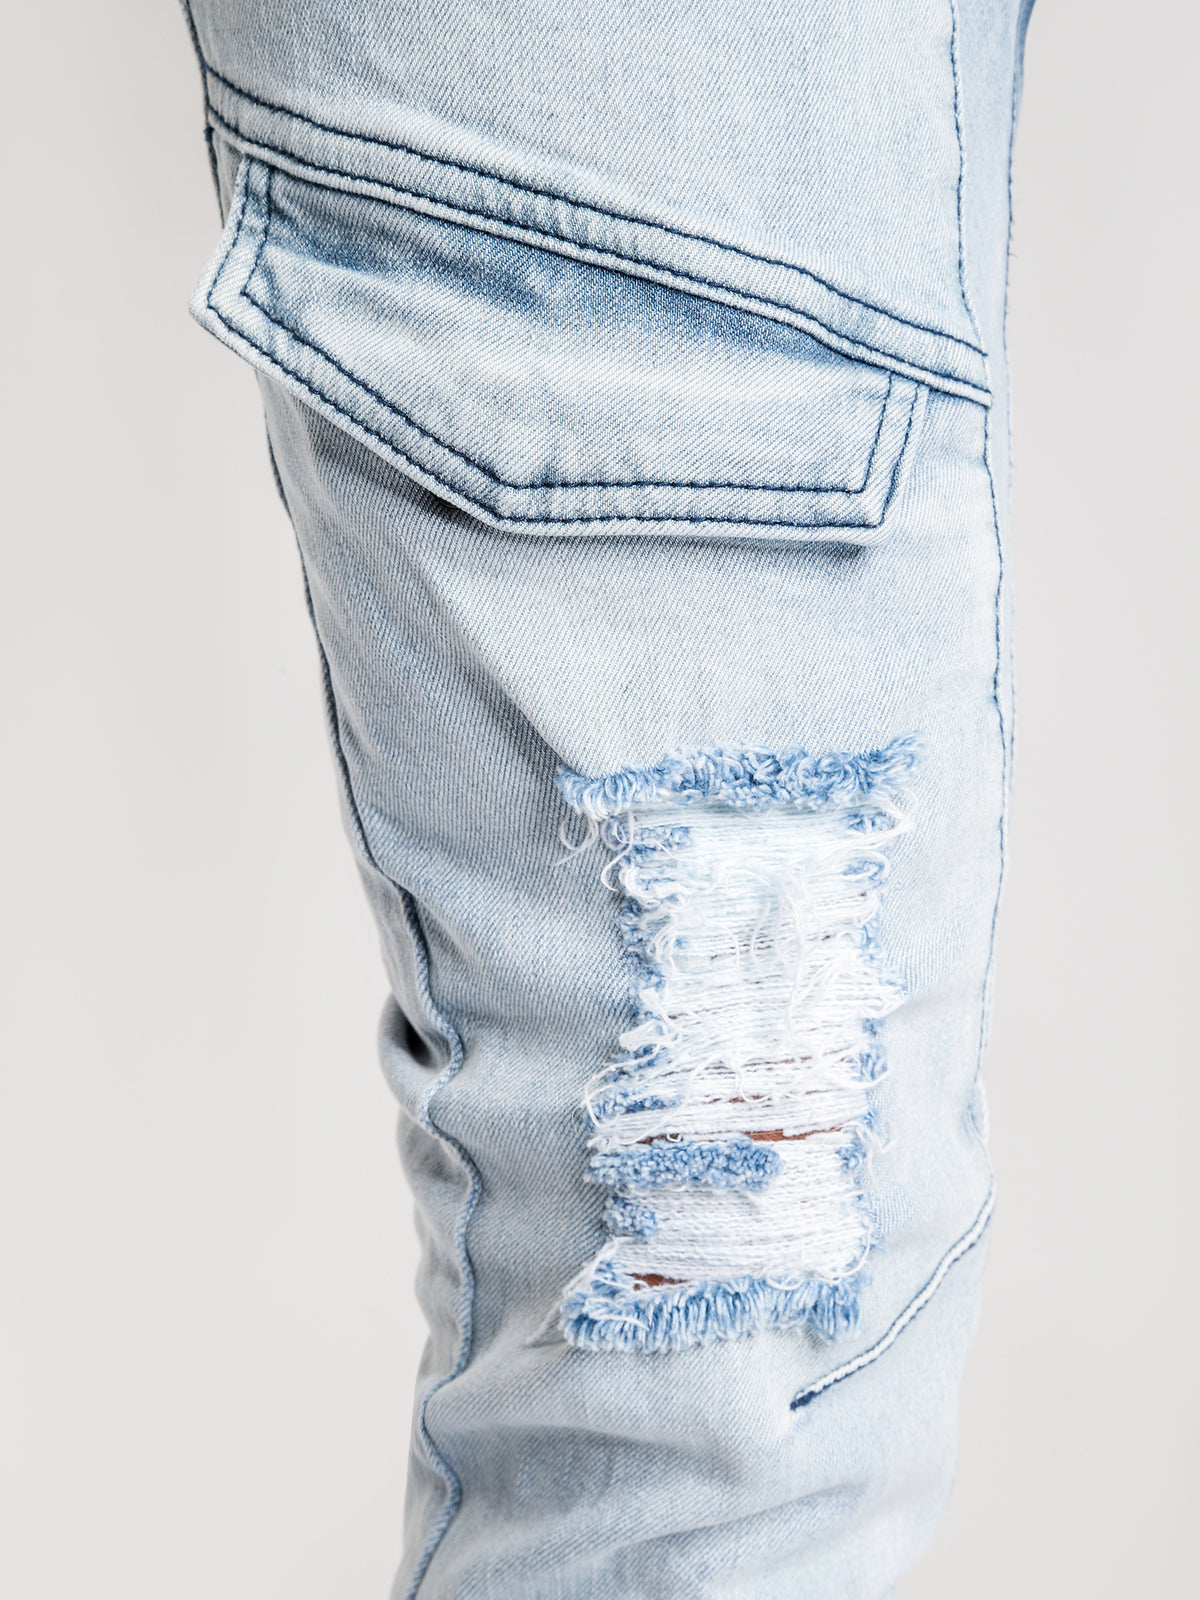 Flight Engineered Jeans in Broken Bleach Denim